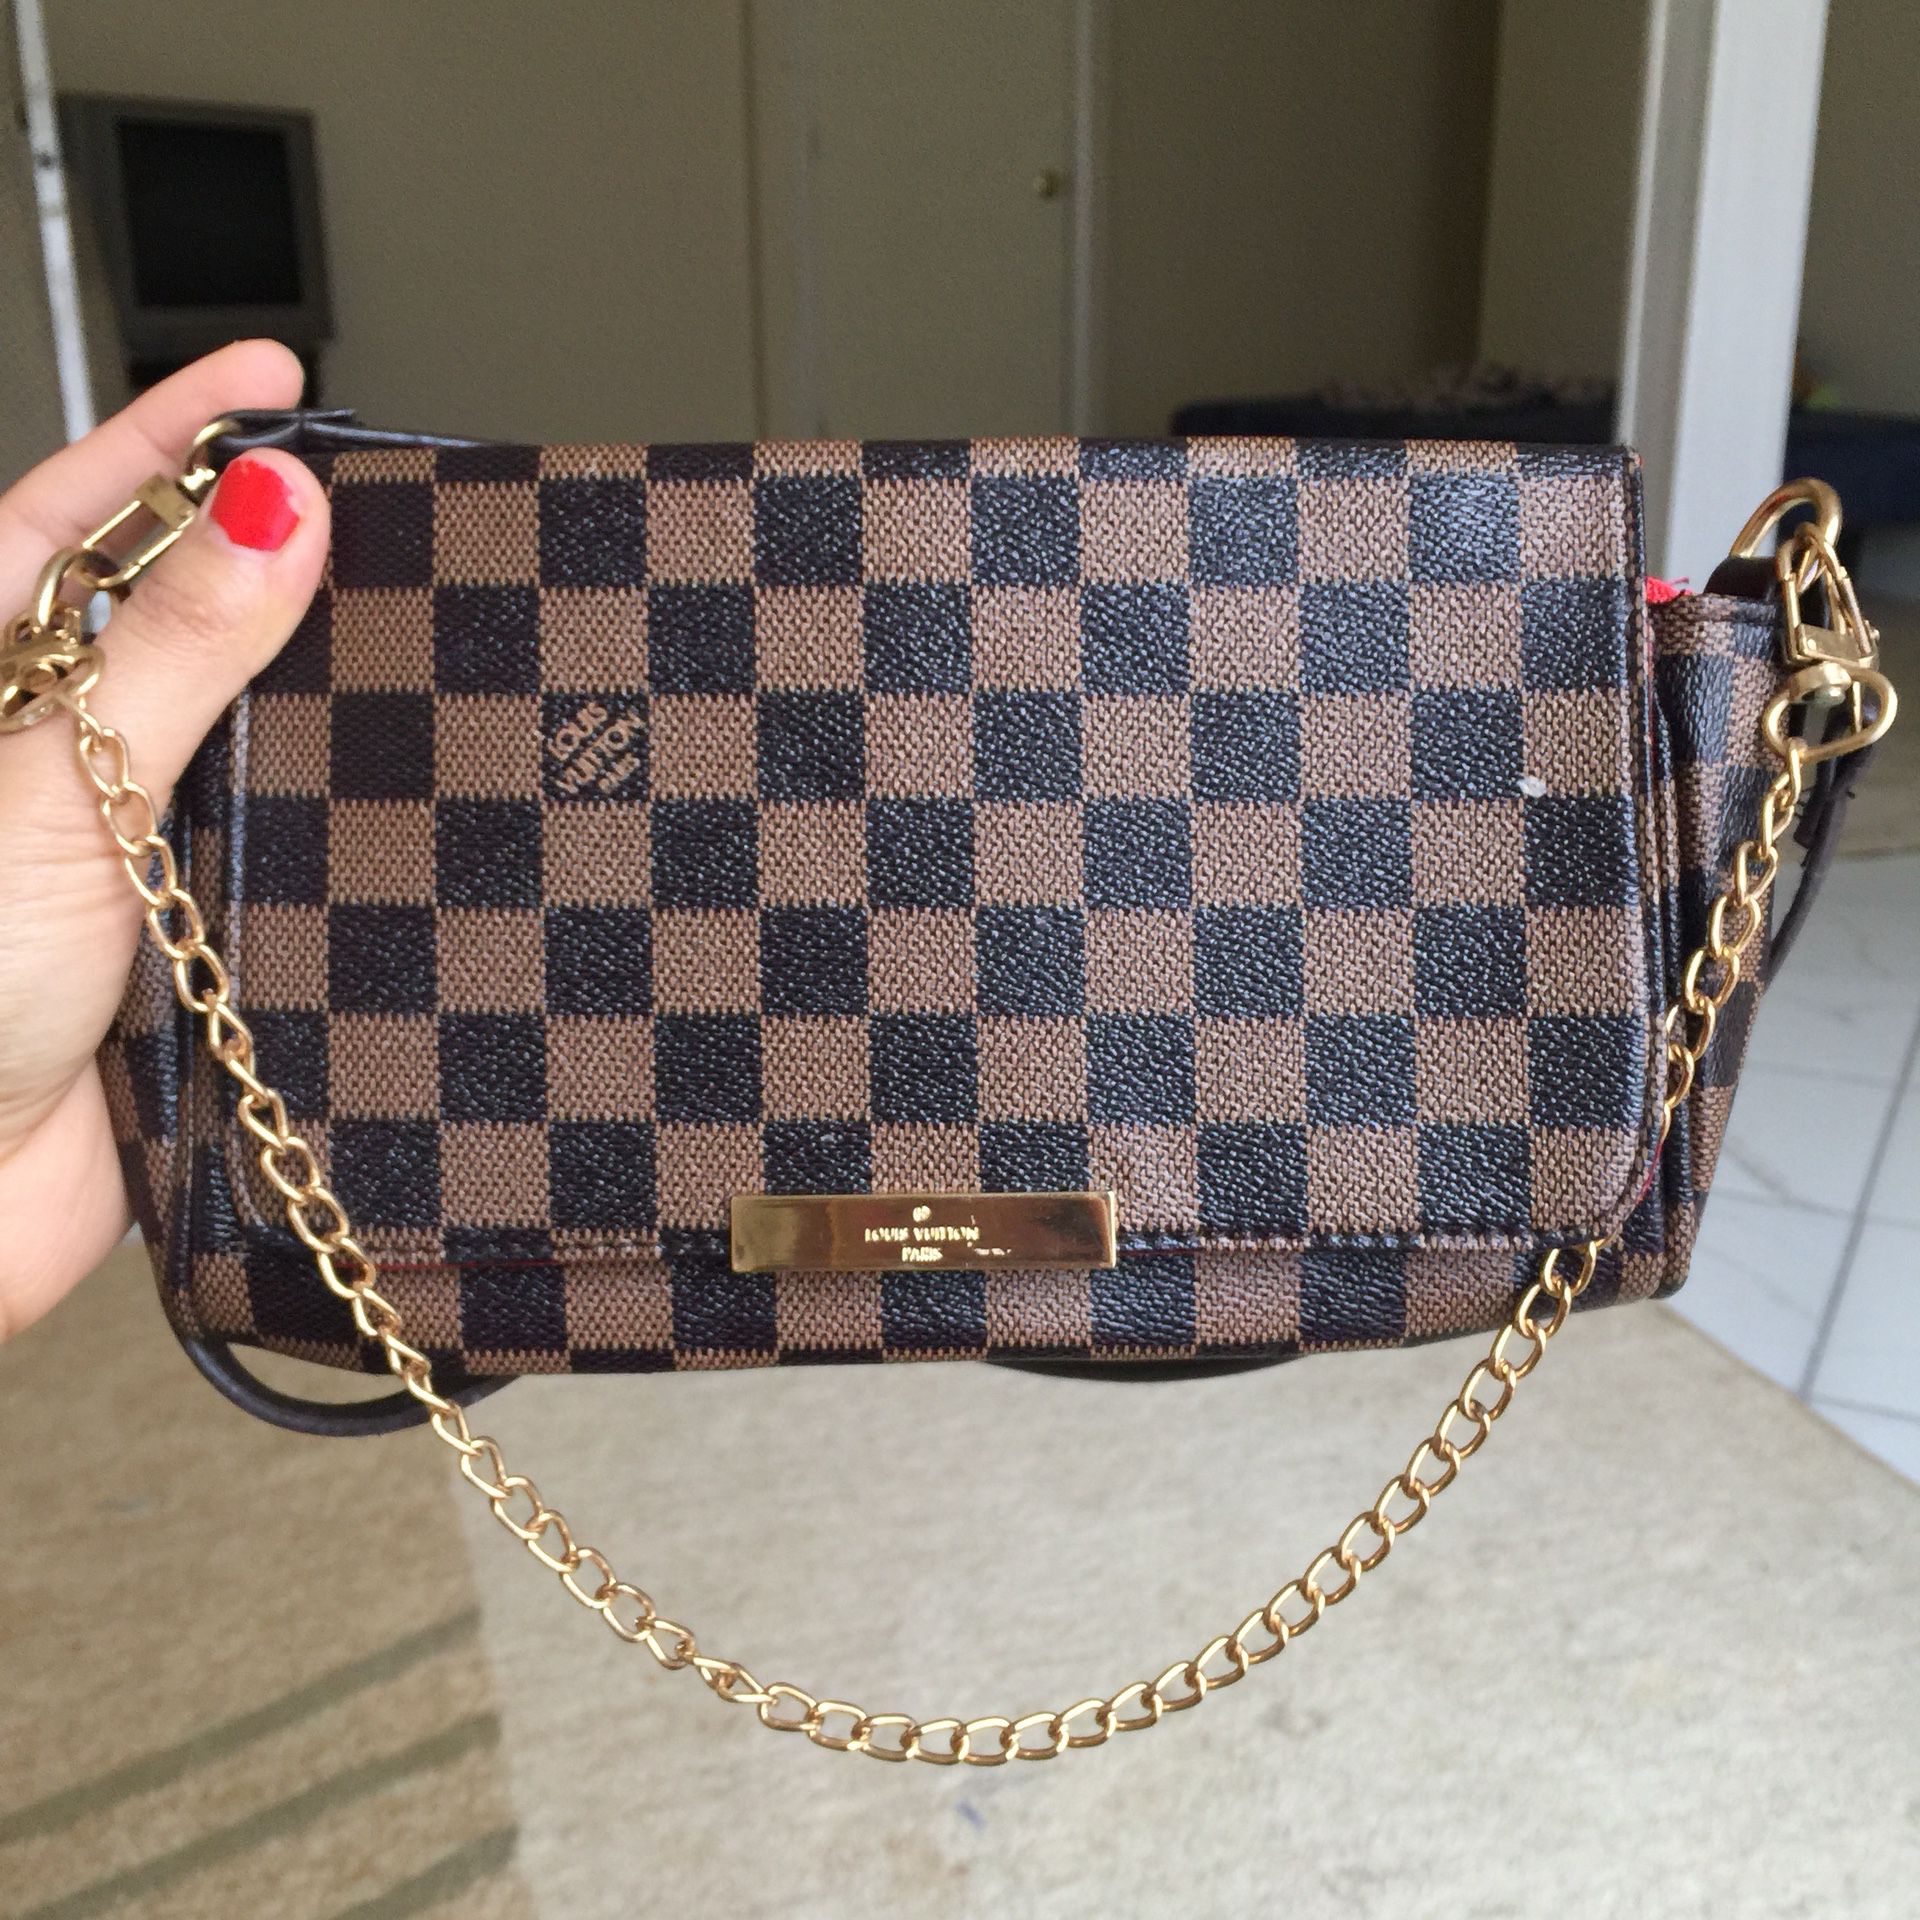 Lv wallet purse hand bag clutch Luis’s Vuitton